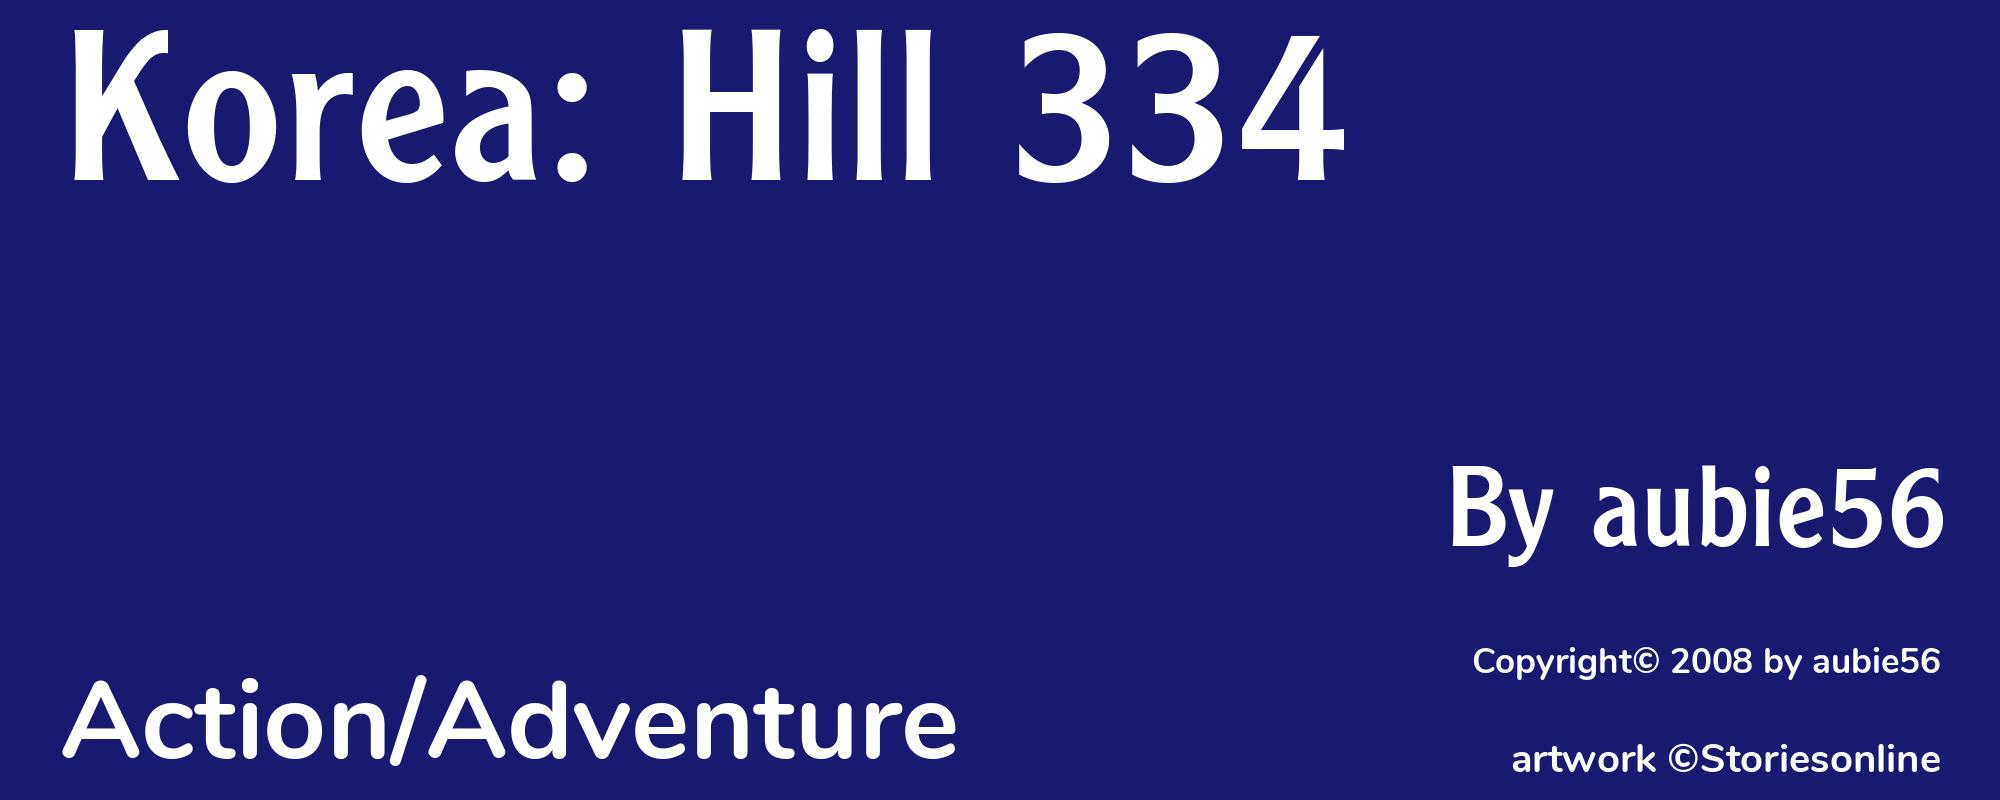 Korea: Hill 334 - Cover